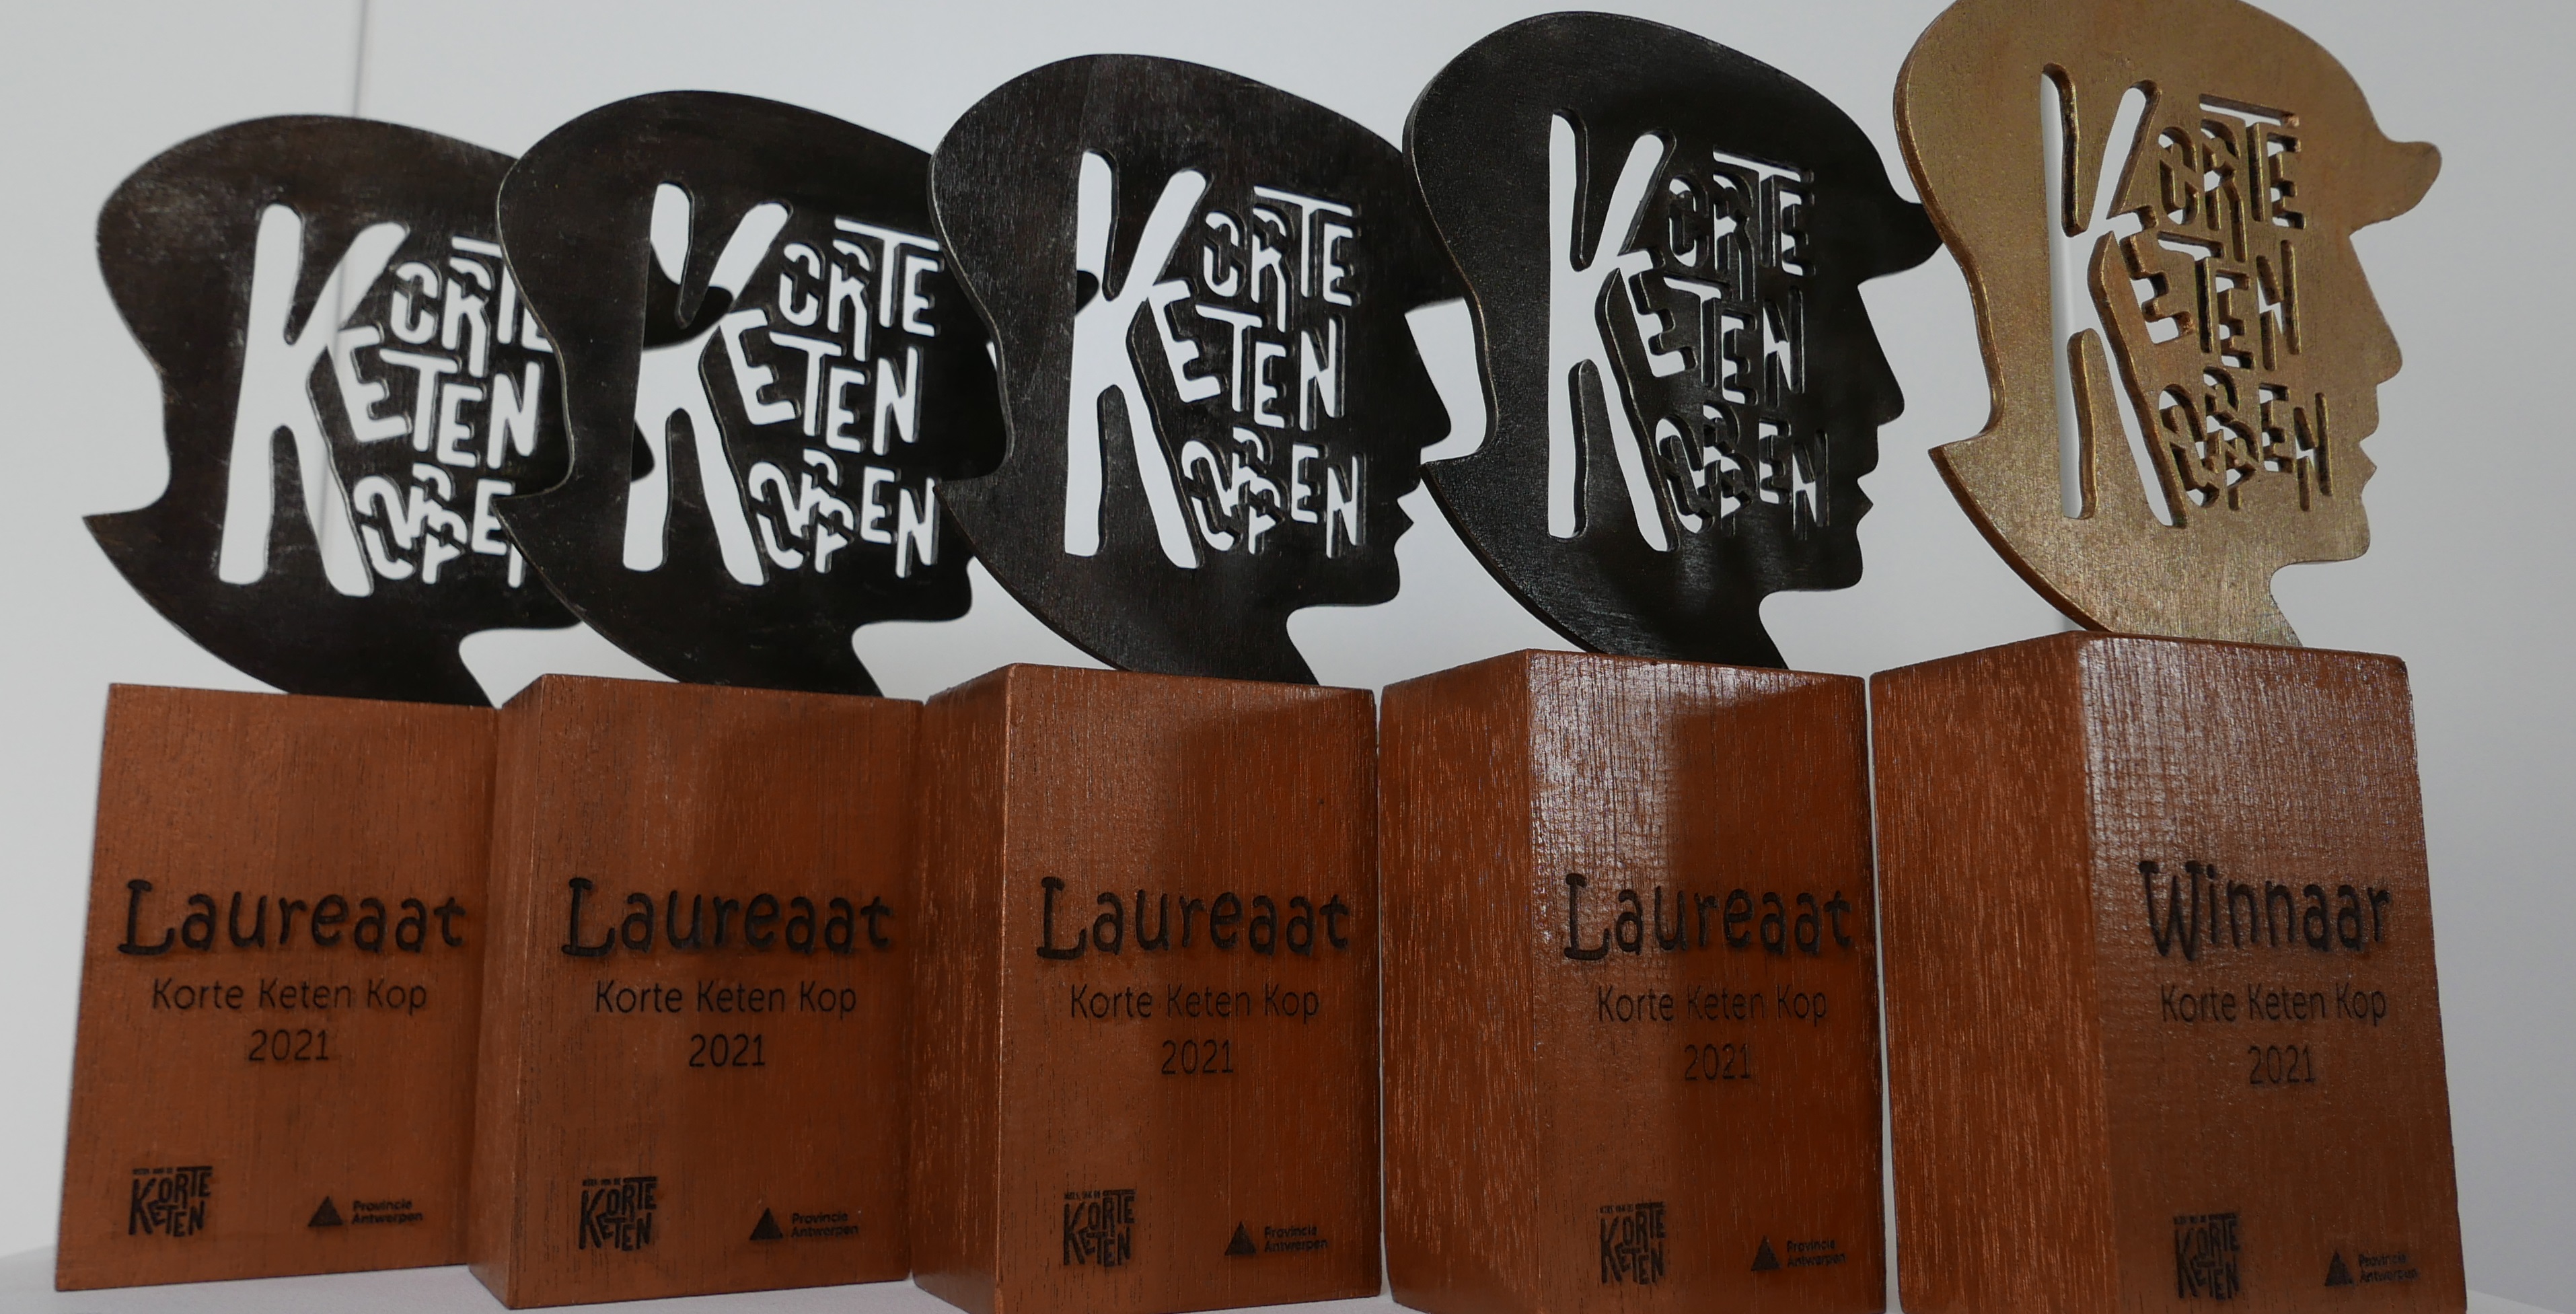 design award - gepersonaliseerde award - 3d-trofee - 3D-award